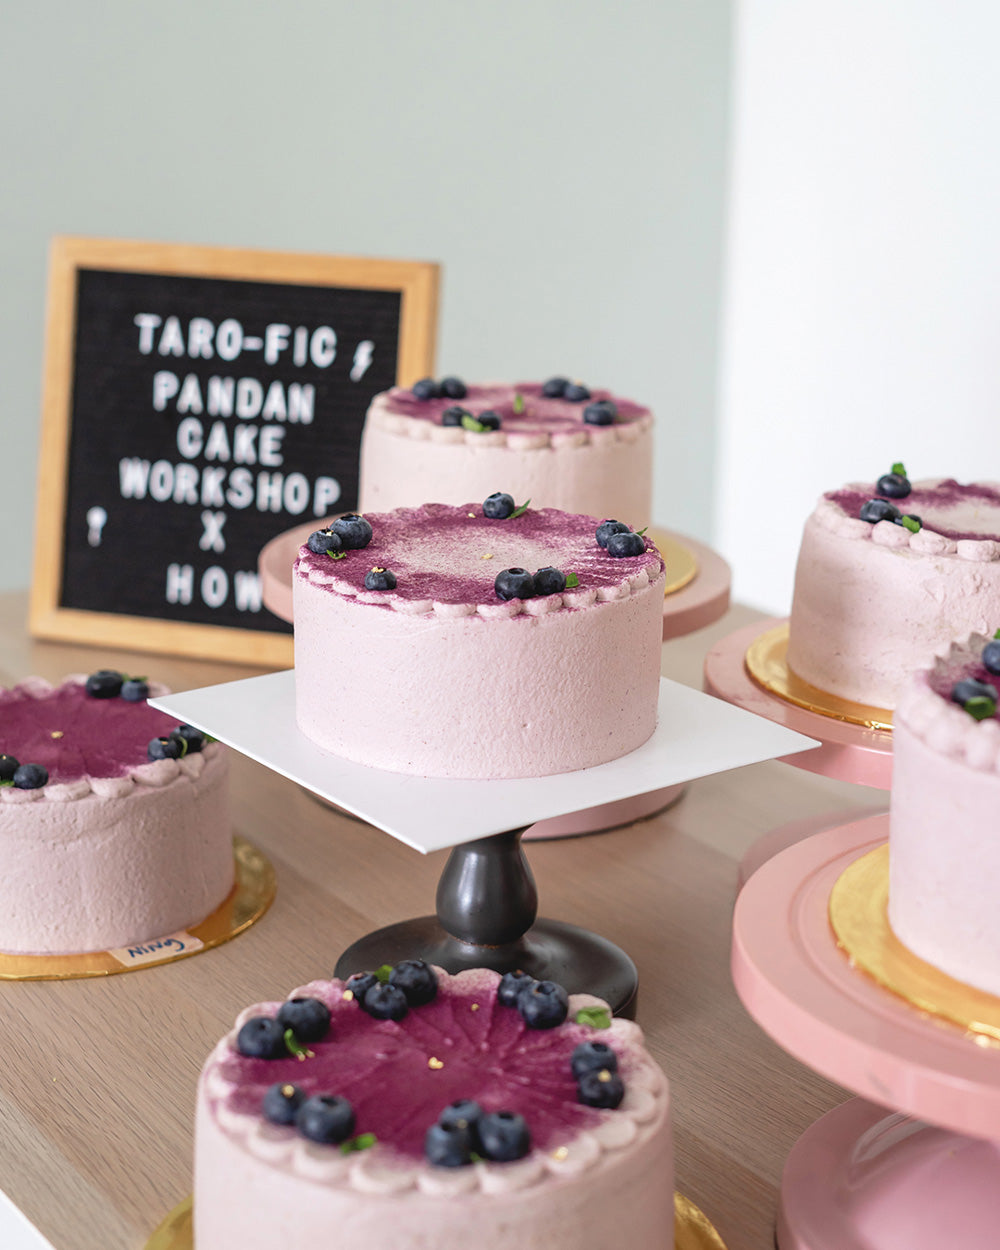 Taroo-Fic Pandan Cake 1.0 by Hands On Workshop Academy